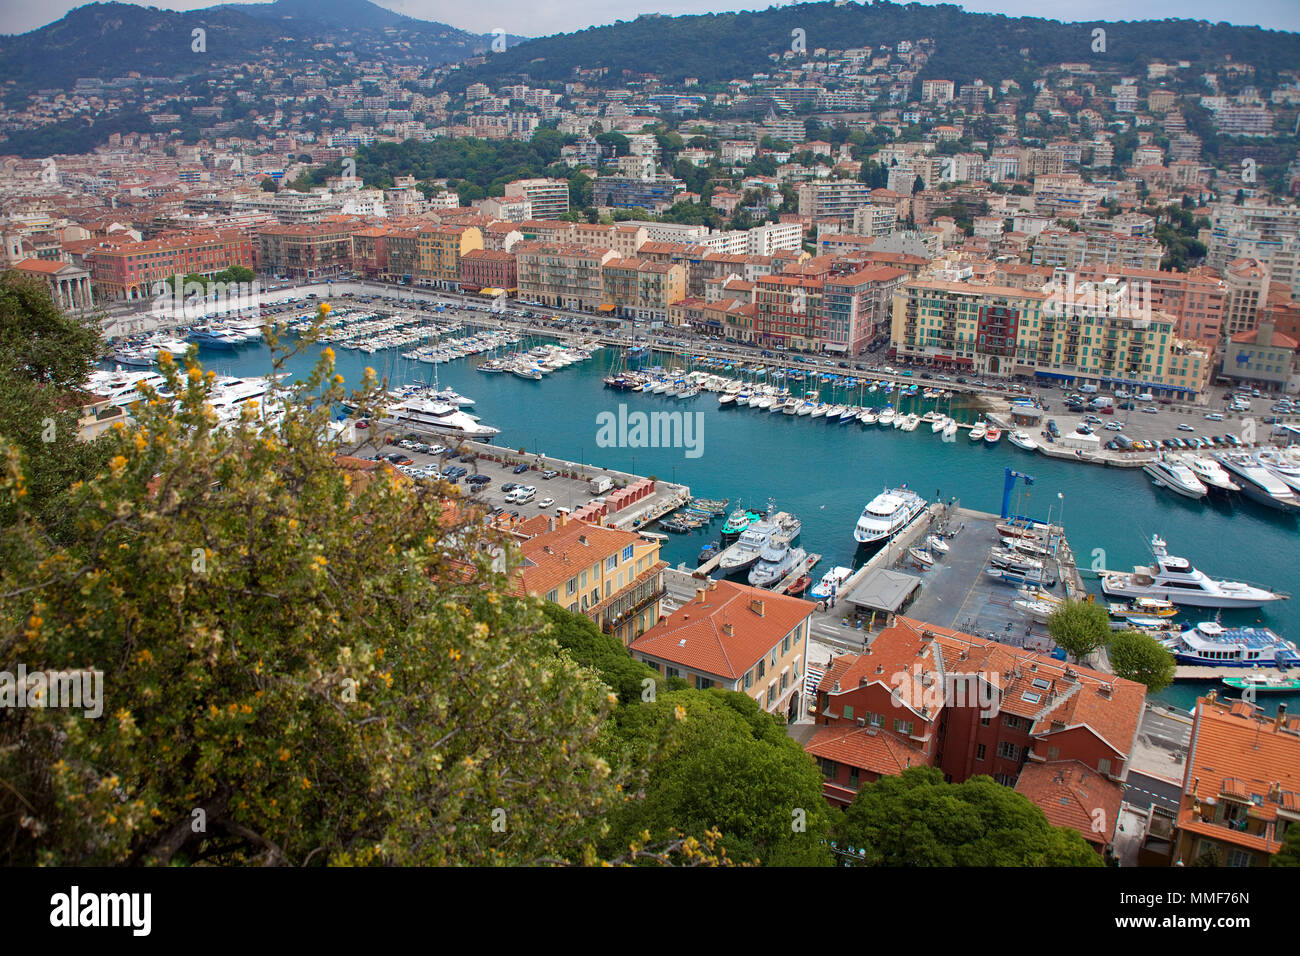 Hafen von Nizza, Côte d’Azur, Alpes-Maritimes, Suedfrankreich, Frankreich | Harbour of Nice, Côte d’Azur, Alpes-Maritimes, South France, France Stock Photo